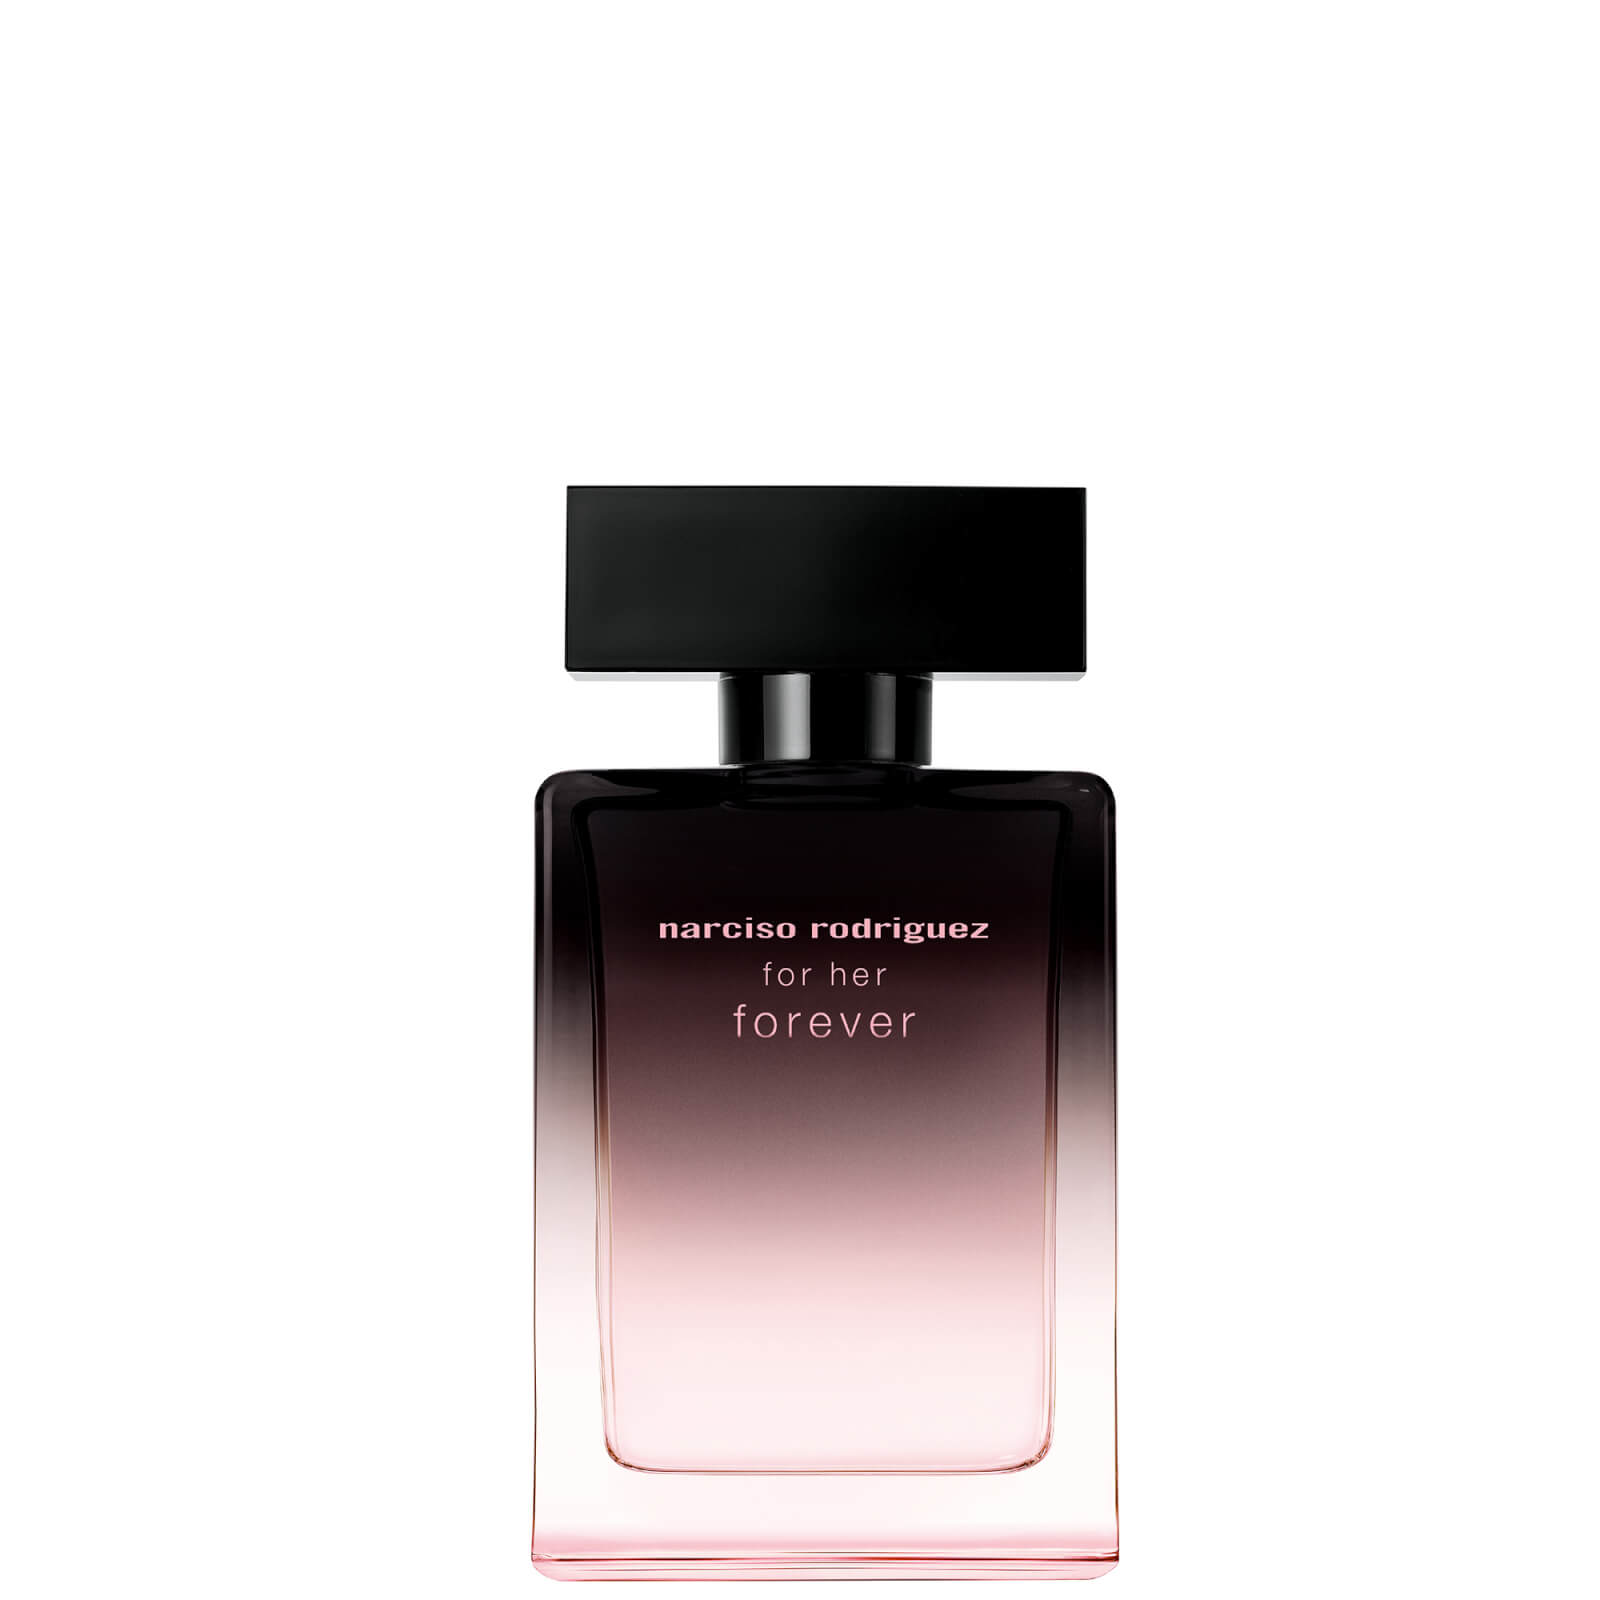 Narciso Rodriguez for Her Forever Eau de Parfum 50ml von Narciso Rodriguez